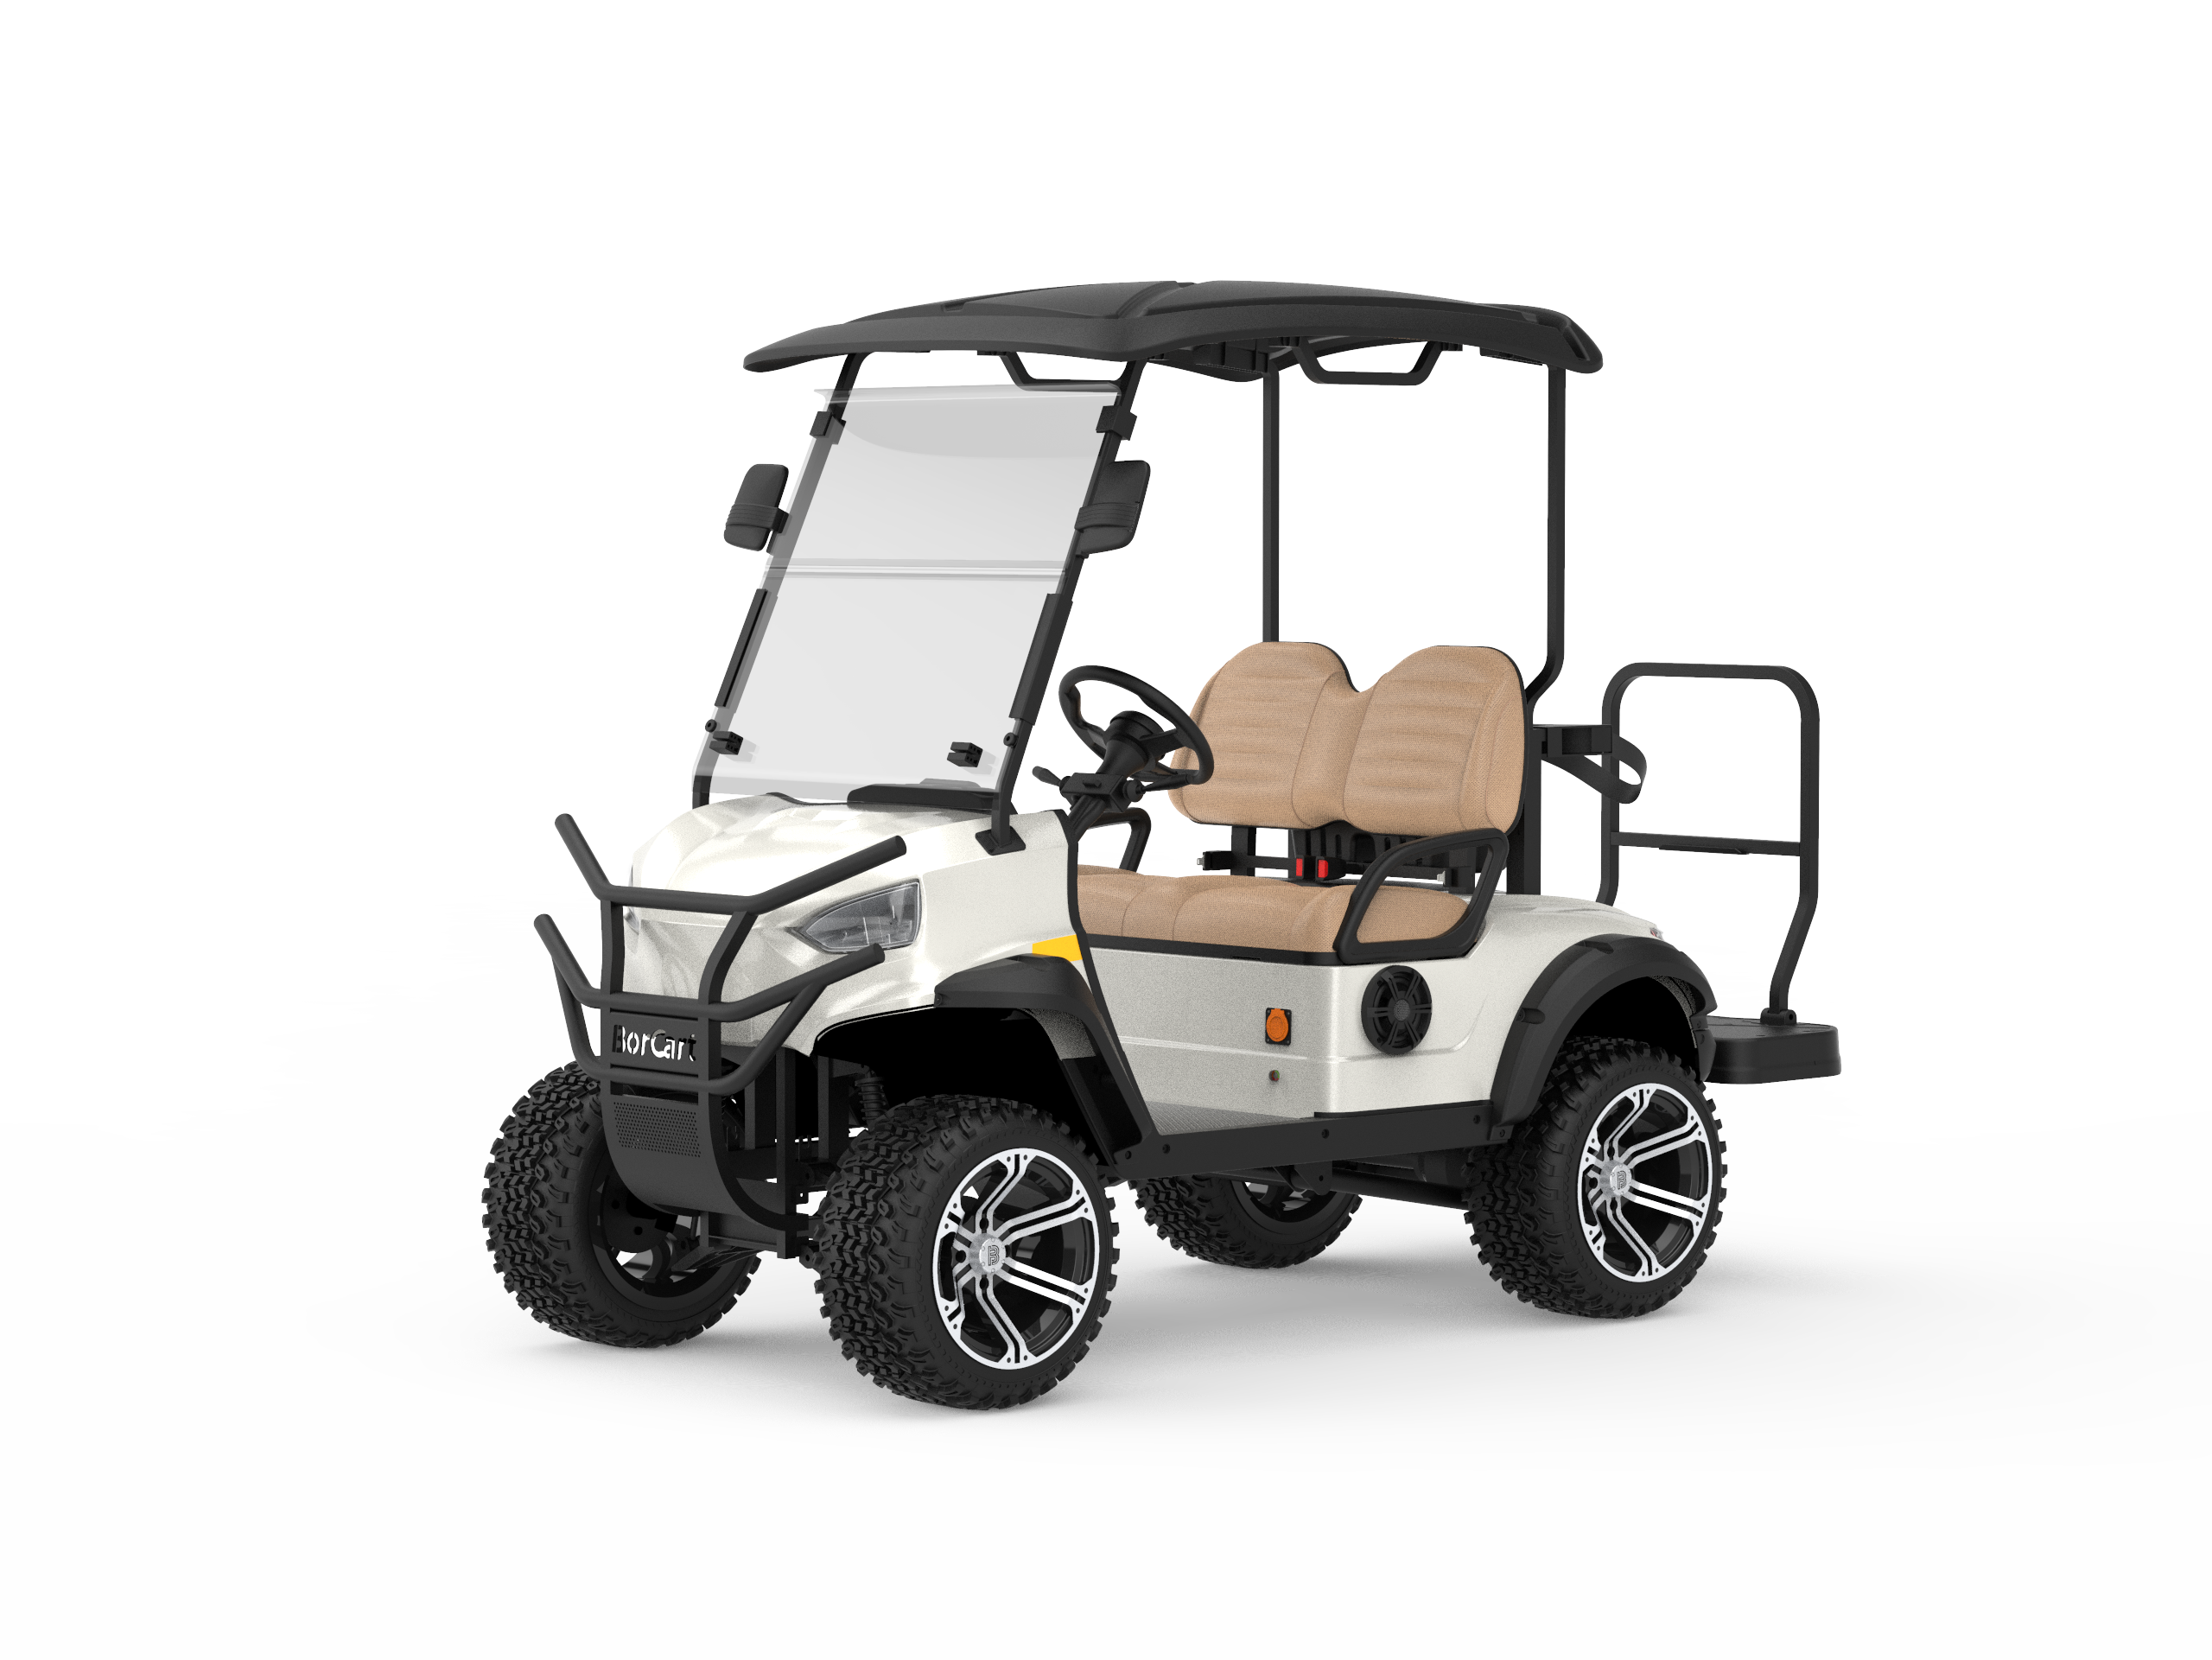 Golf cart and personal cart Manufacturer in China - Borcart